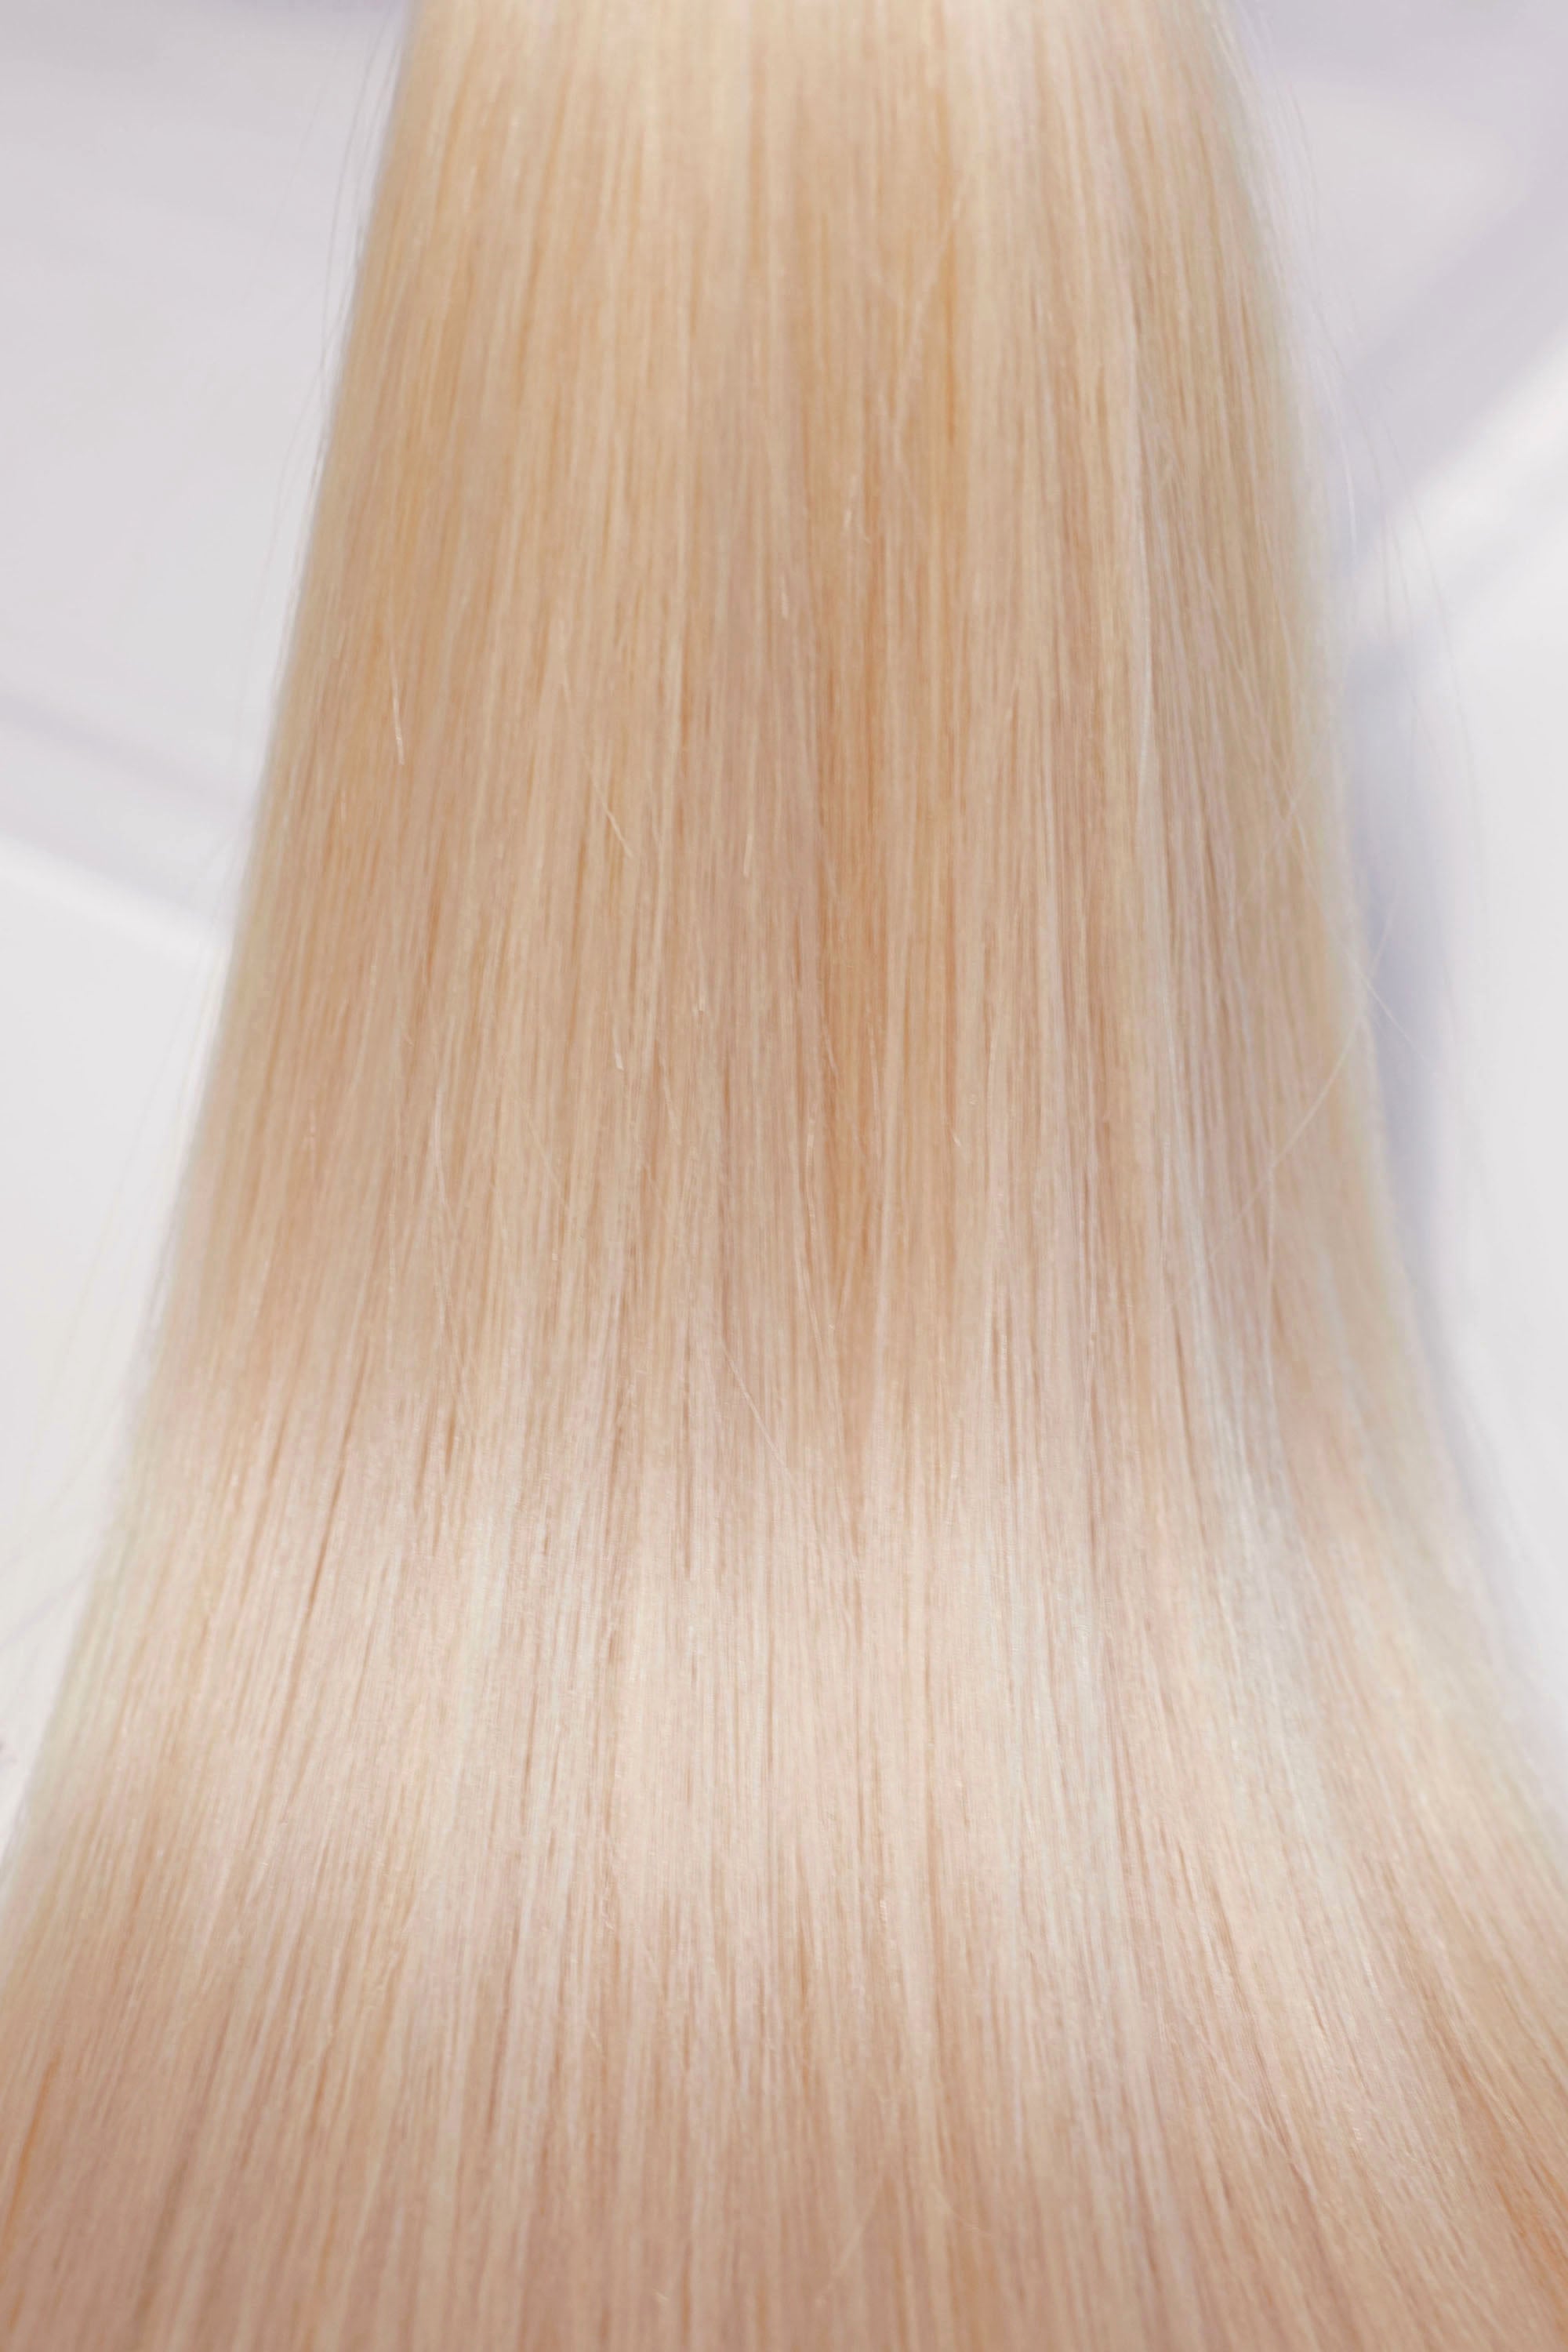 Behair professional Keratin Tip "Premium" 26" (65cm) Natural Straight Platinum Blond #60 - 25g (1g each pcs) hair extensions